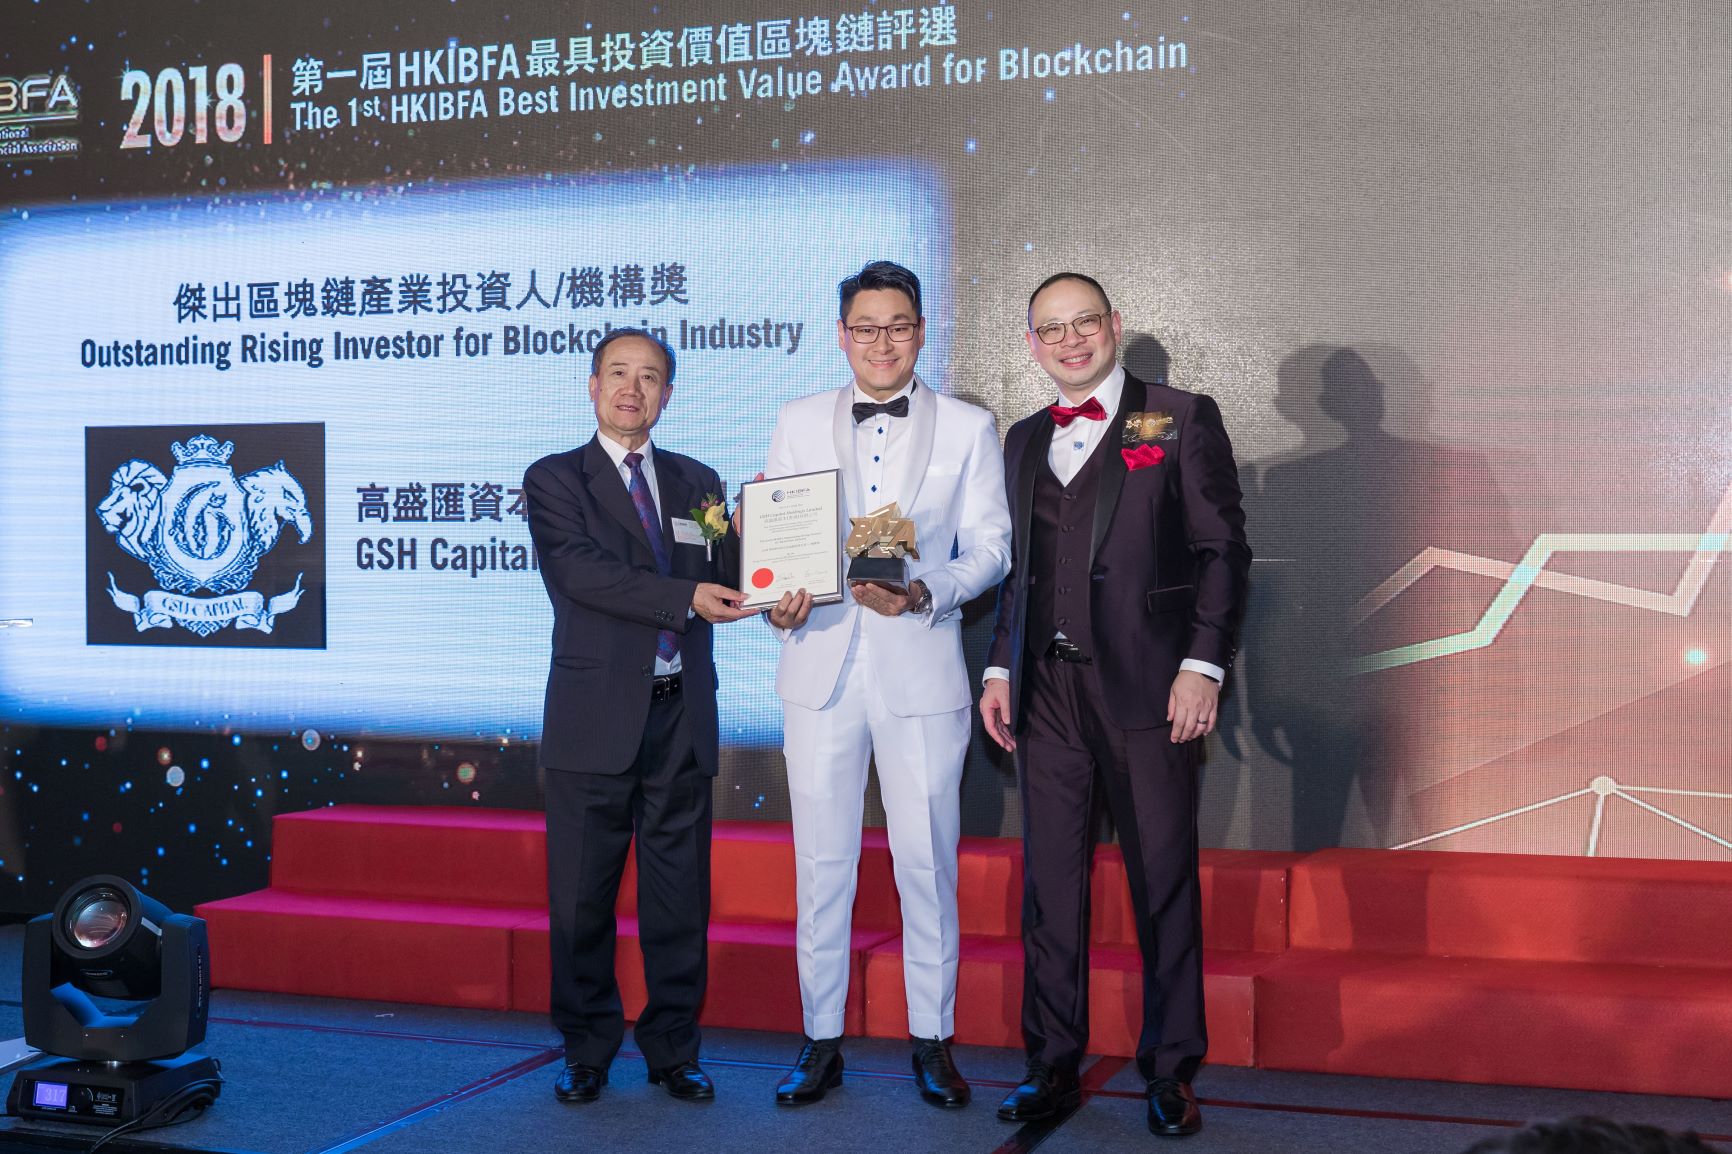 The 2018 HKIBFA Outstanding Rising Investor for Blockchain Industry award